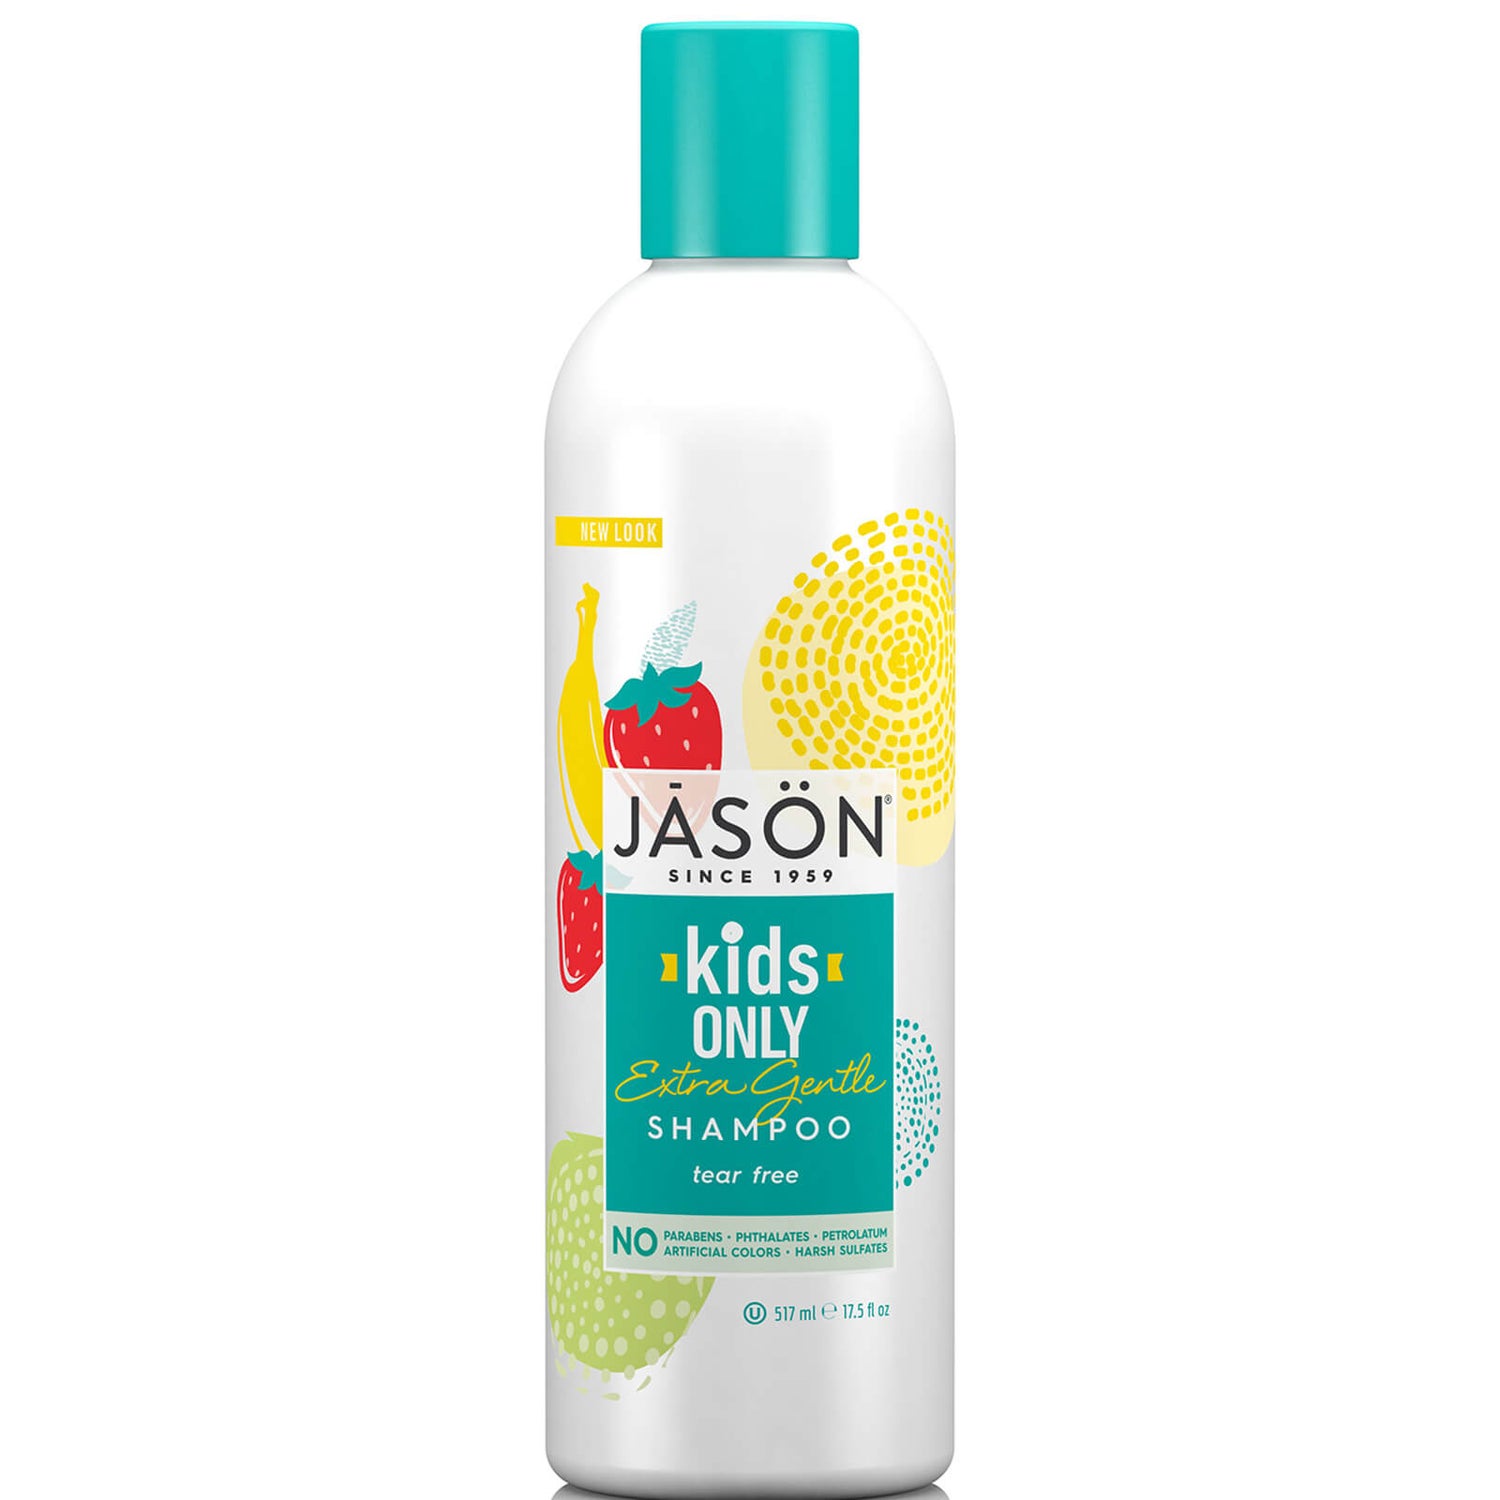 JASON Kids Only Extra Gentle Shampoo 517ml